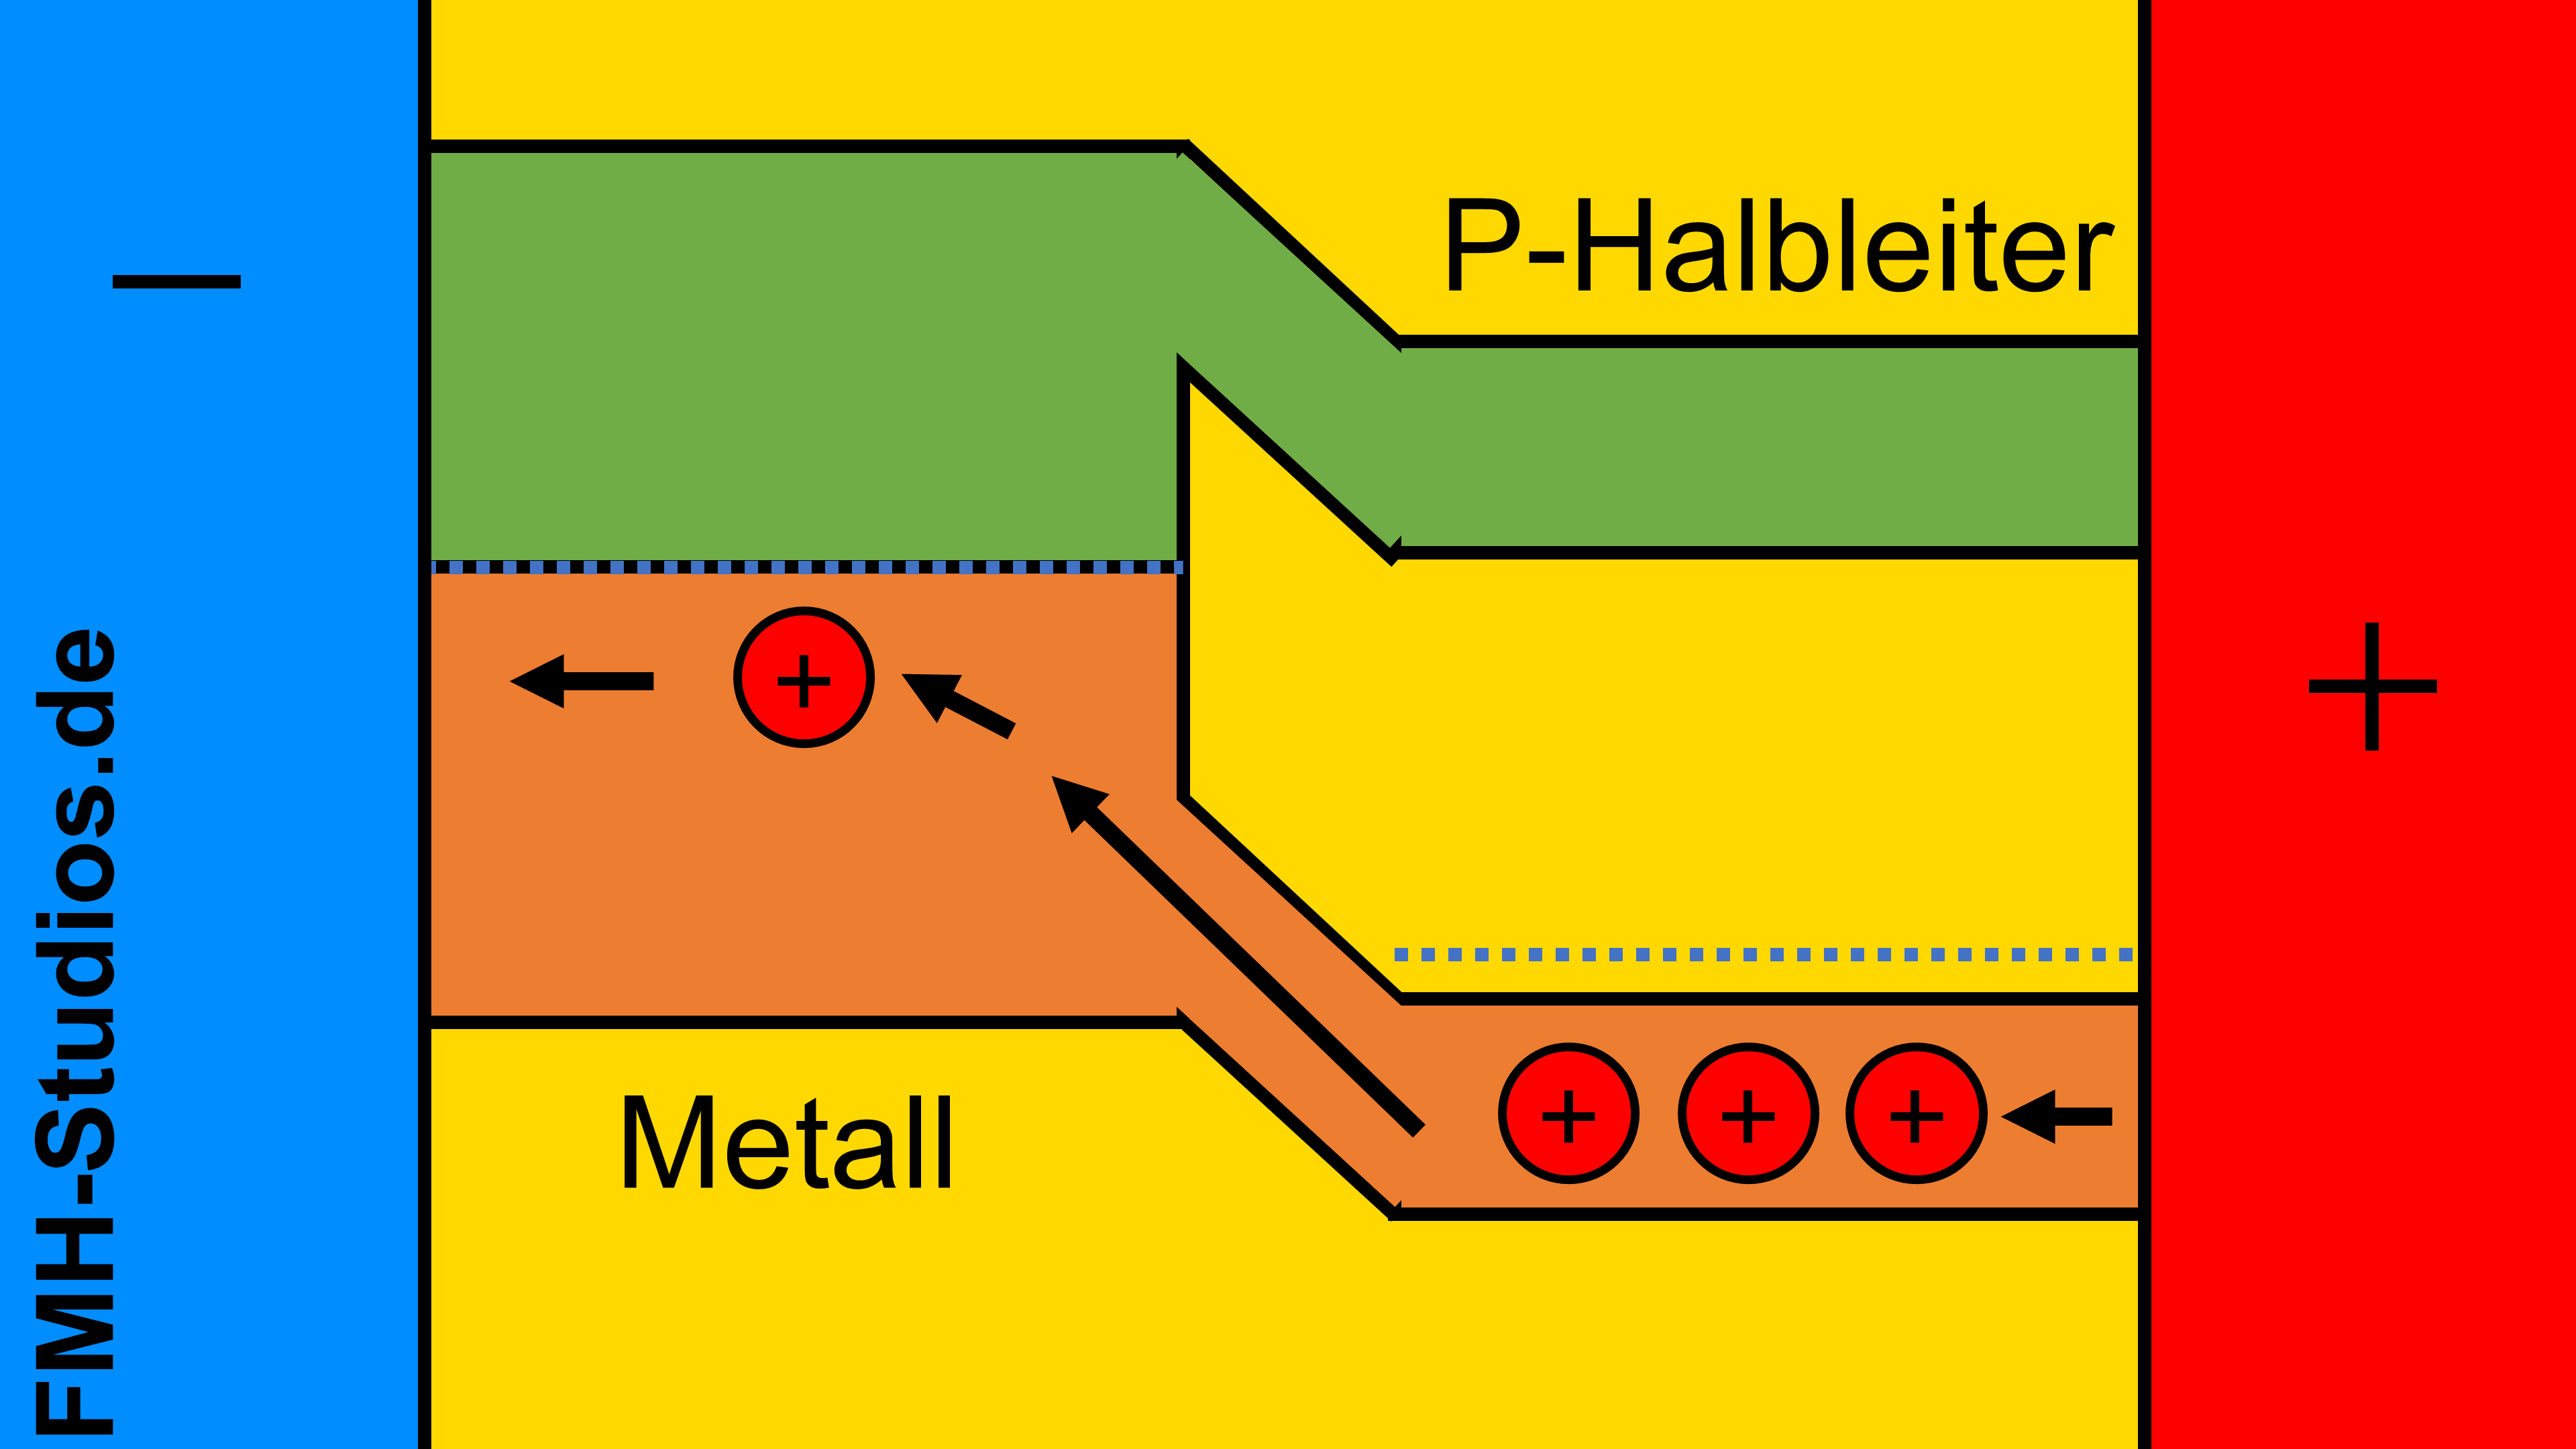 Diode - PN-Übergang – Halbleiter - Bändermodell – P-dotierter – Metall – Übergang – Elektronen - Elektronenfluss - Metall-Halbleiter-Übergang - Flusspolung - Schottky-Kontakt